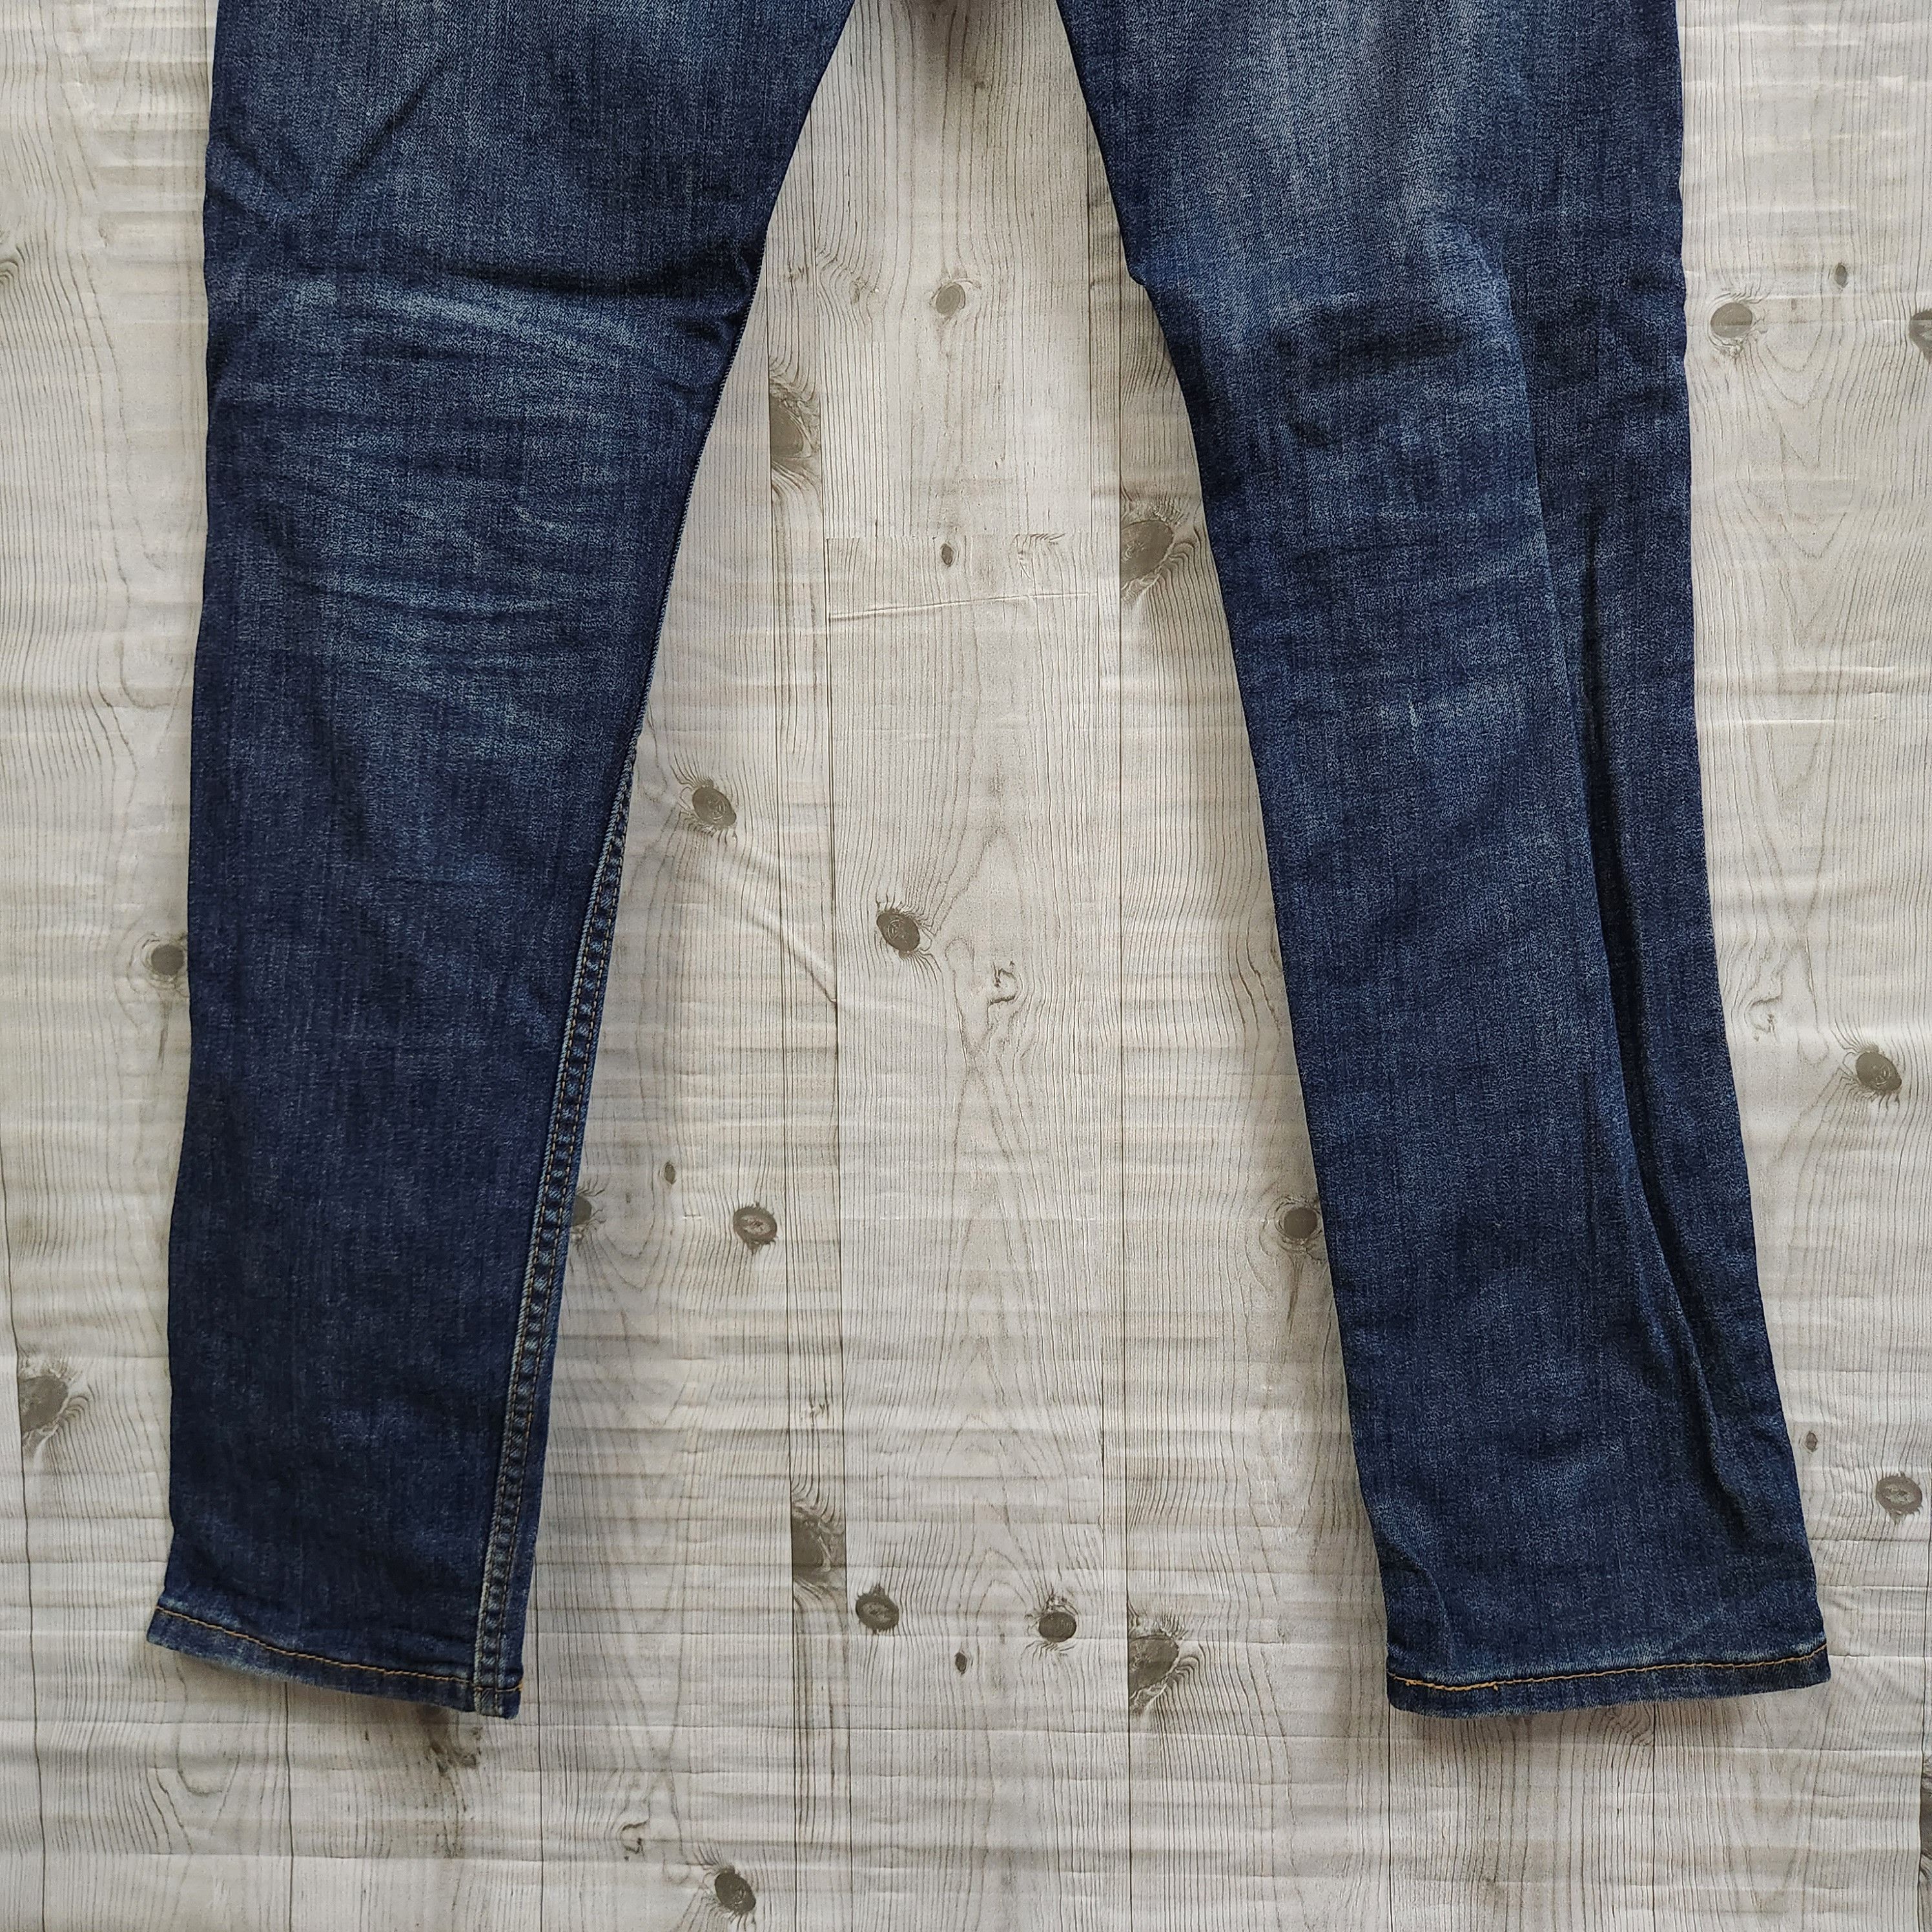 Levi's 510 Blue Denim Jeans - 9